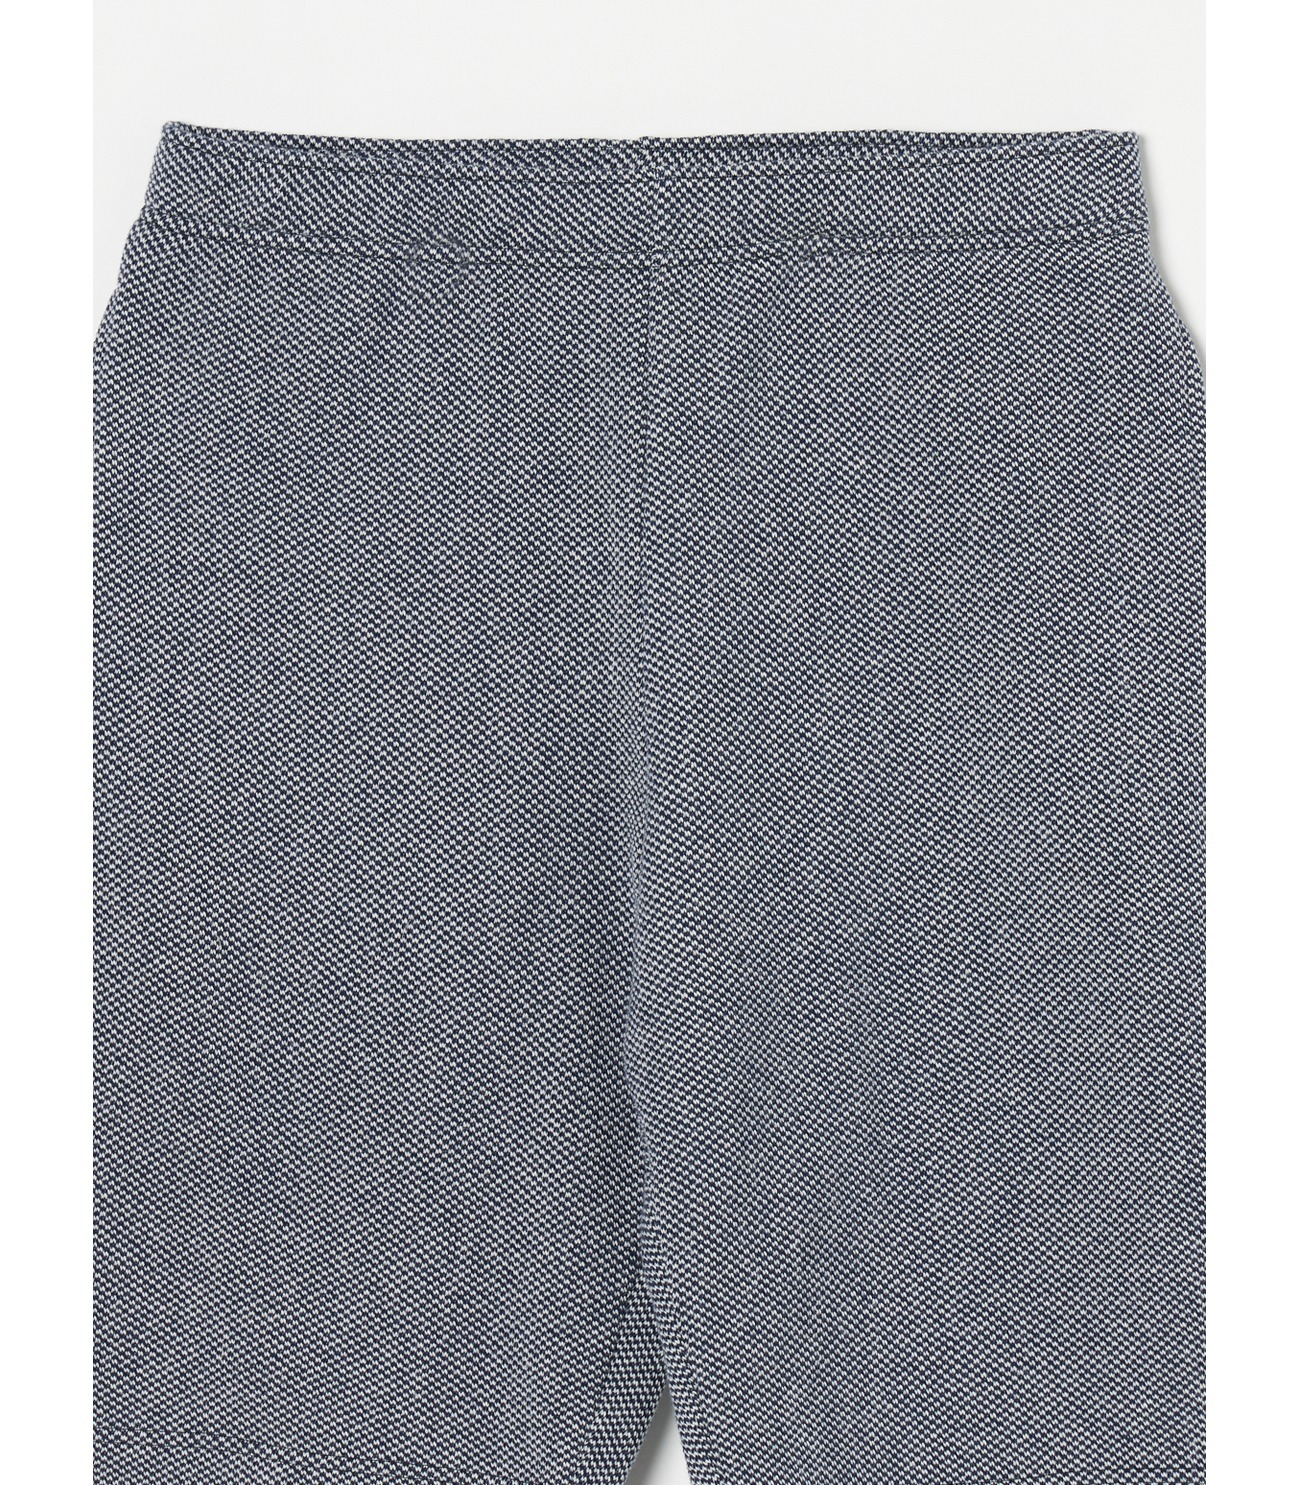 Men's inlay shorts 詳細画像 navy 2